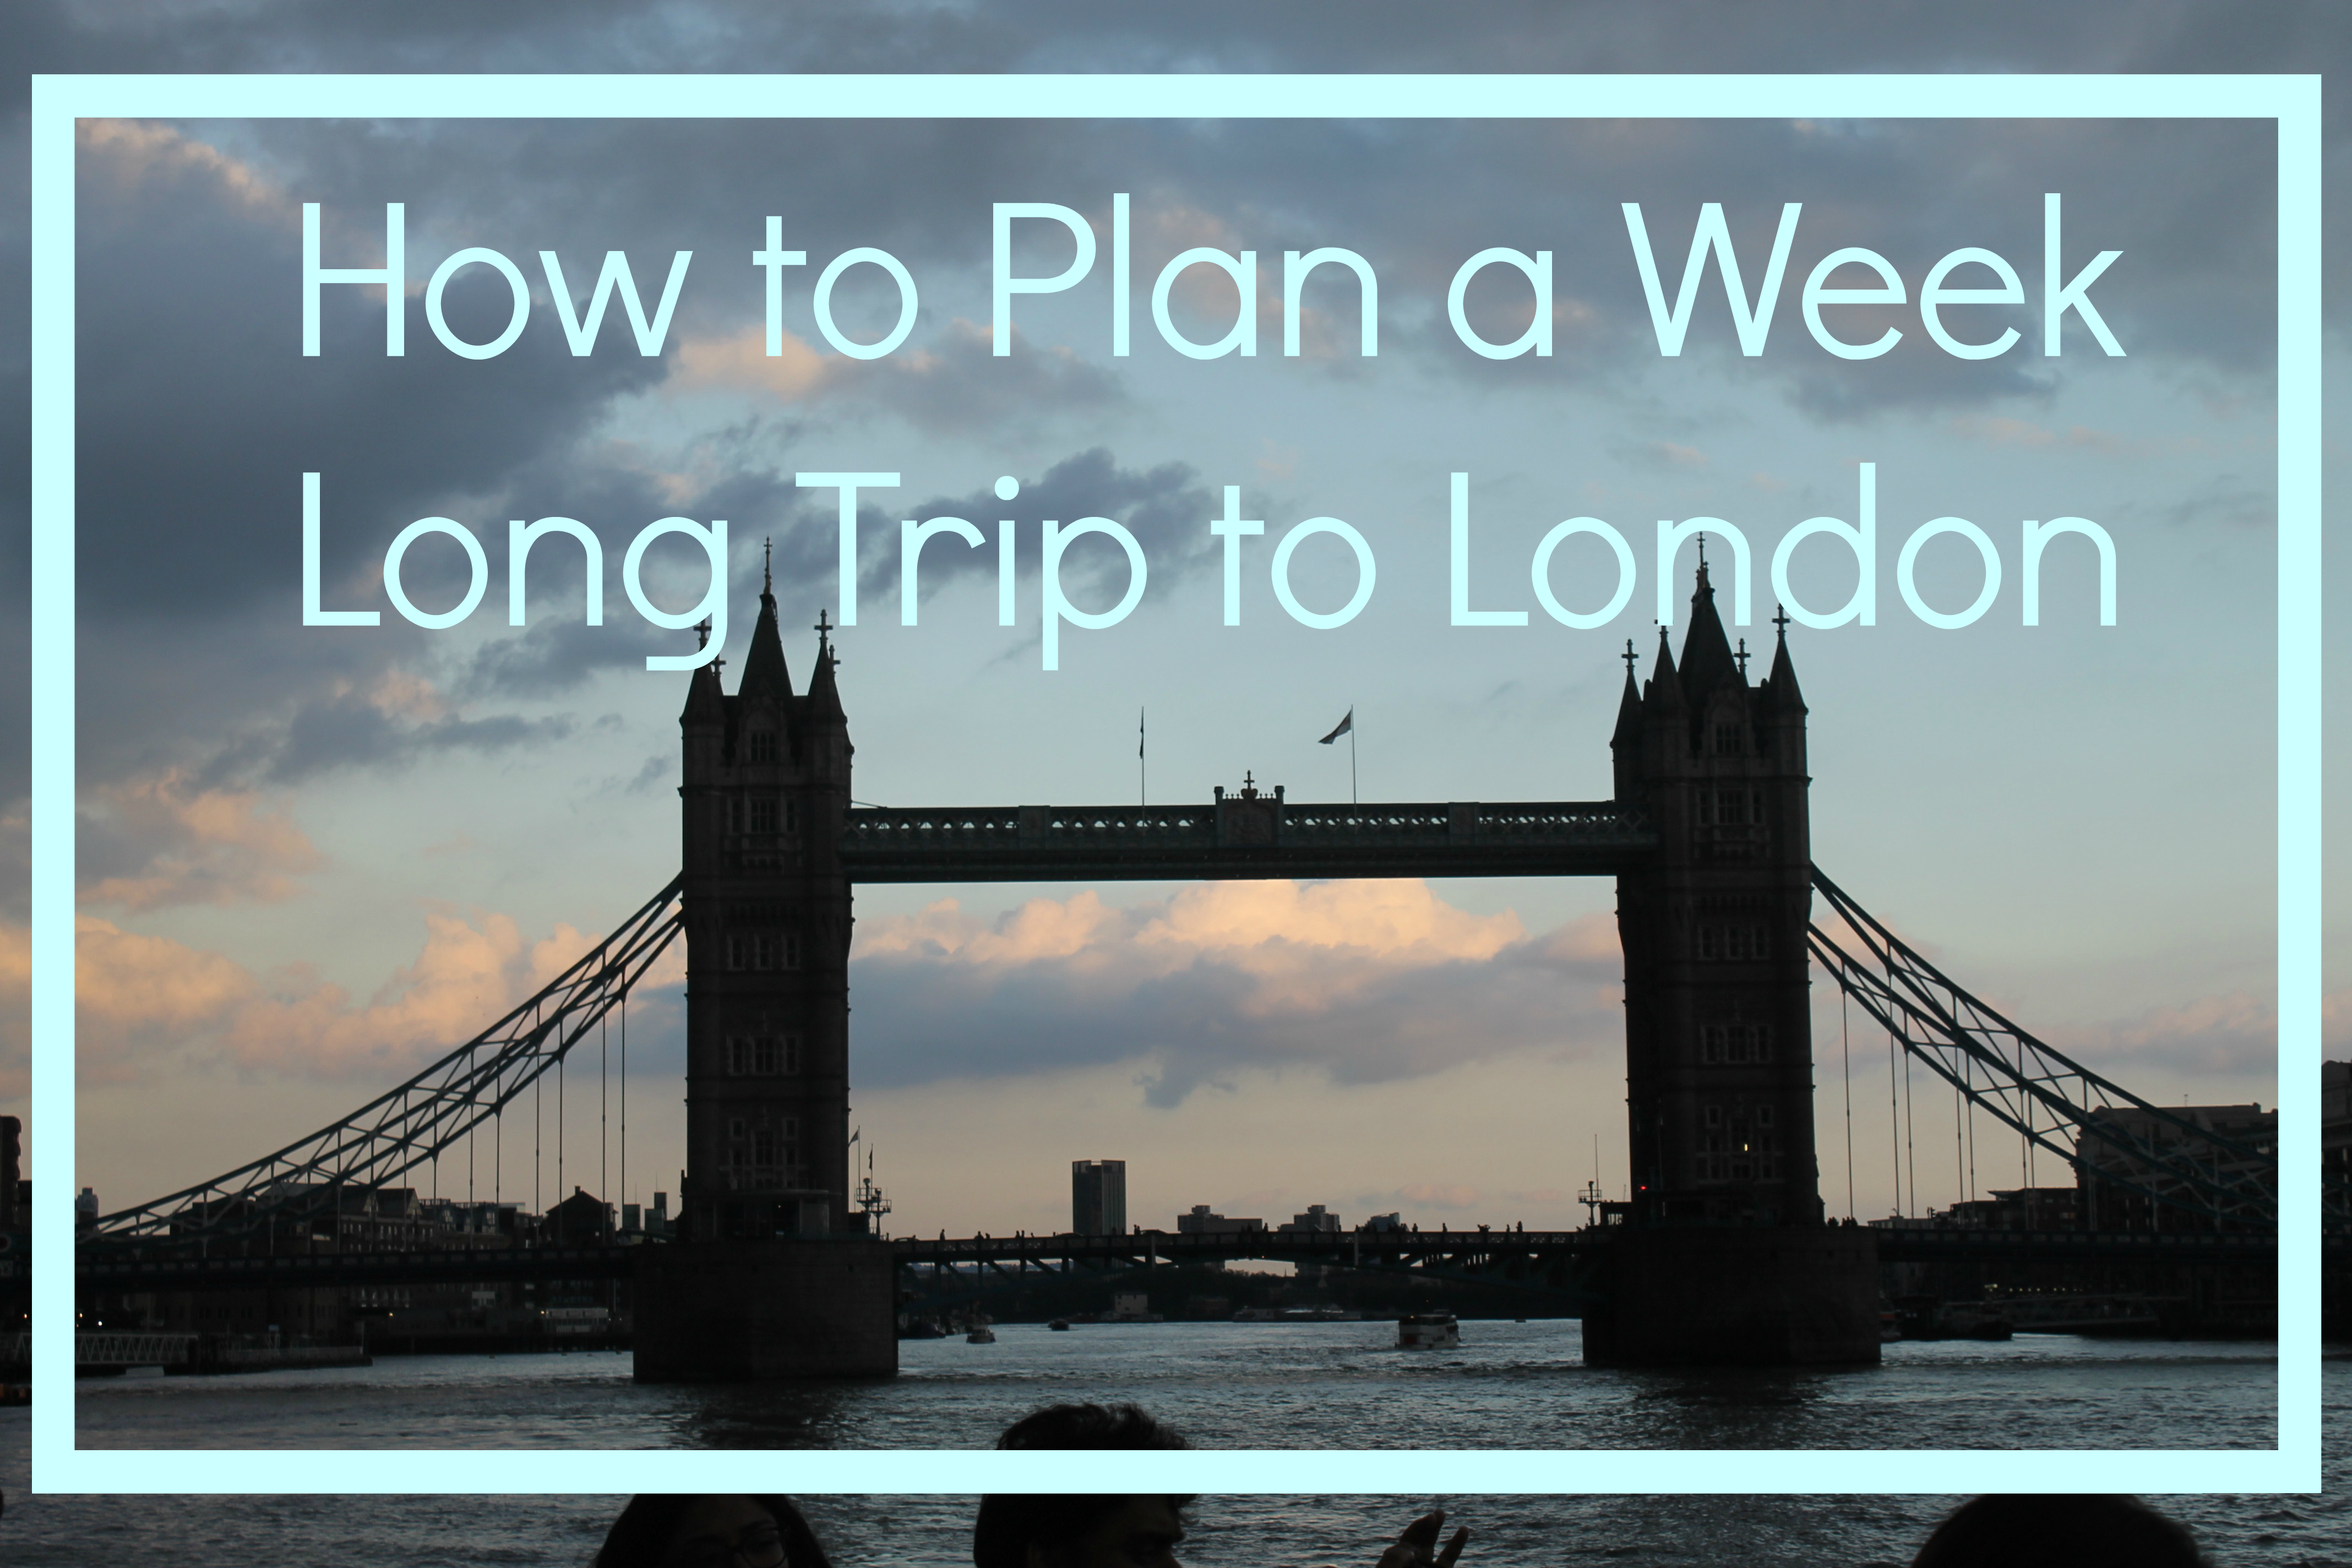 Jordan Taylor C- How to Plan a Week-Long Trip to London